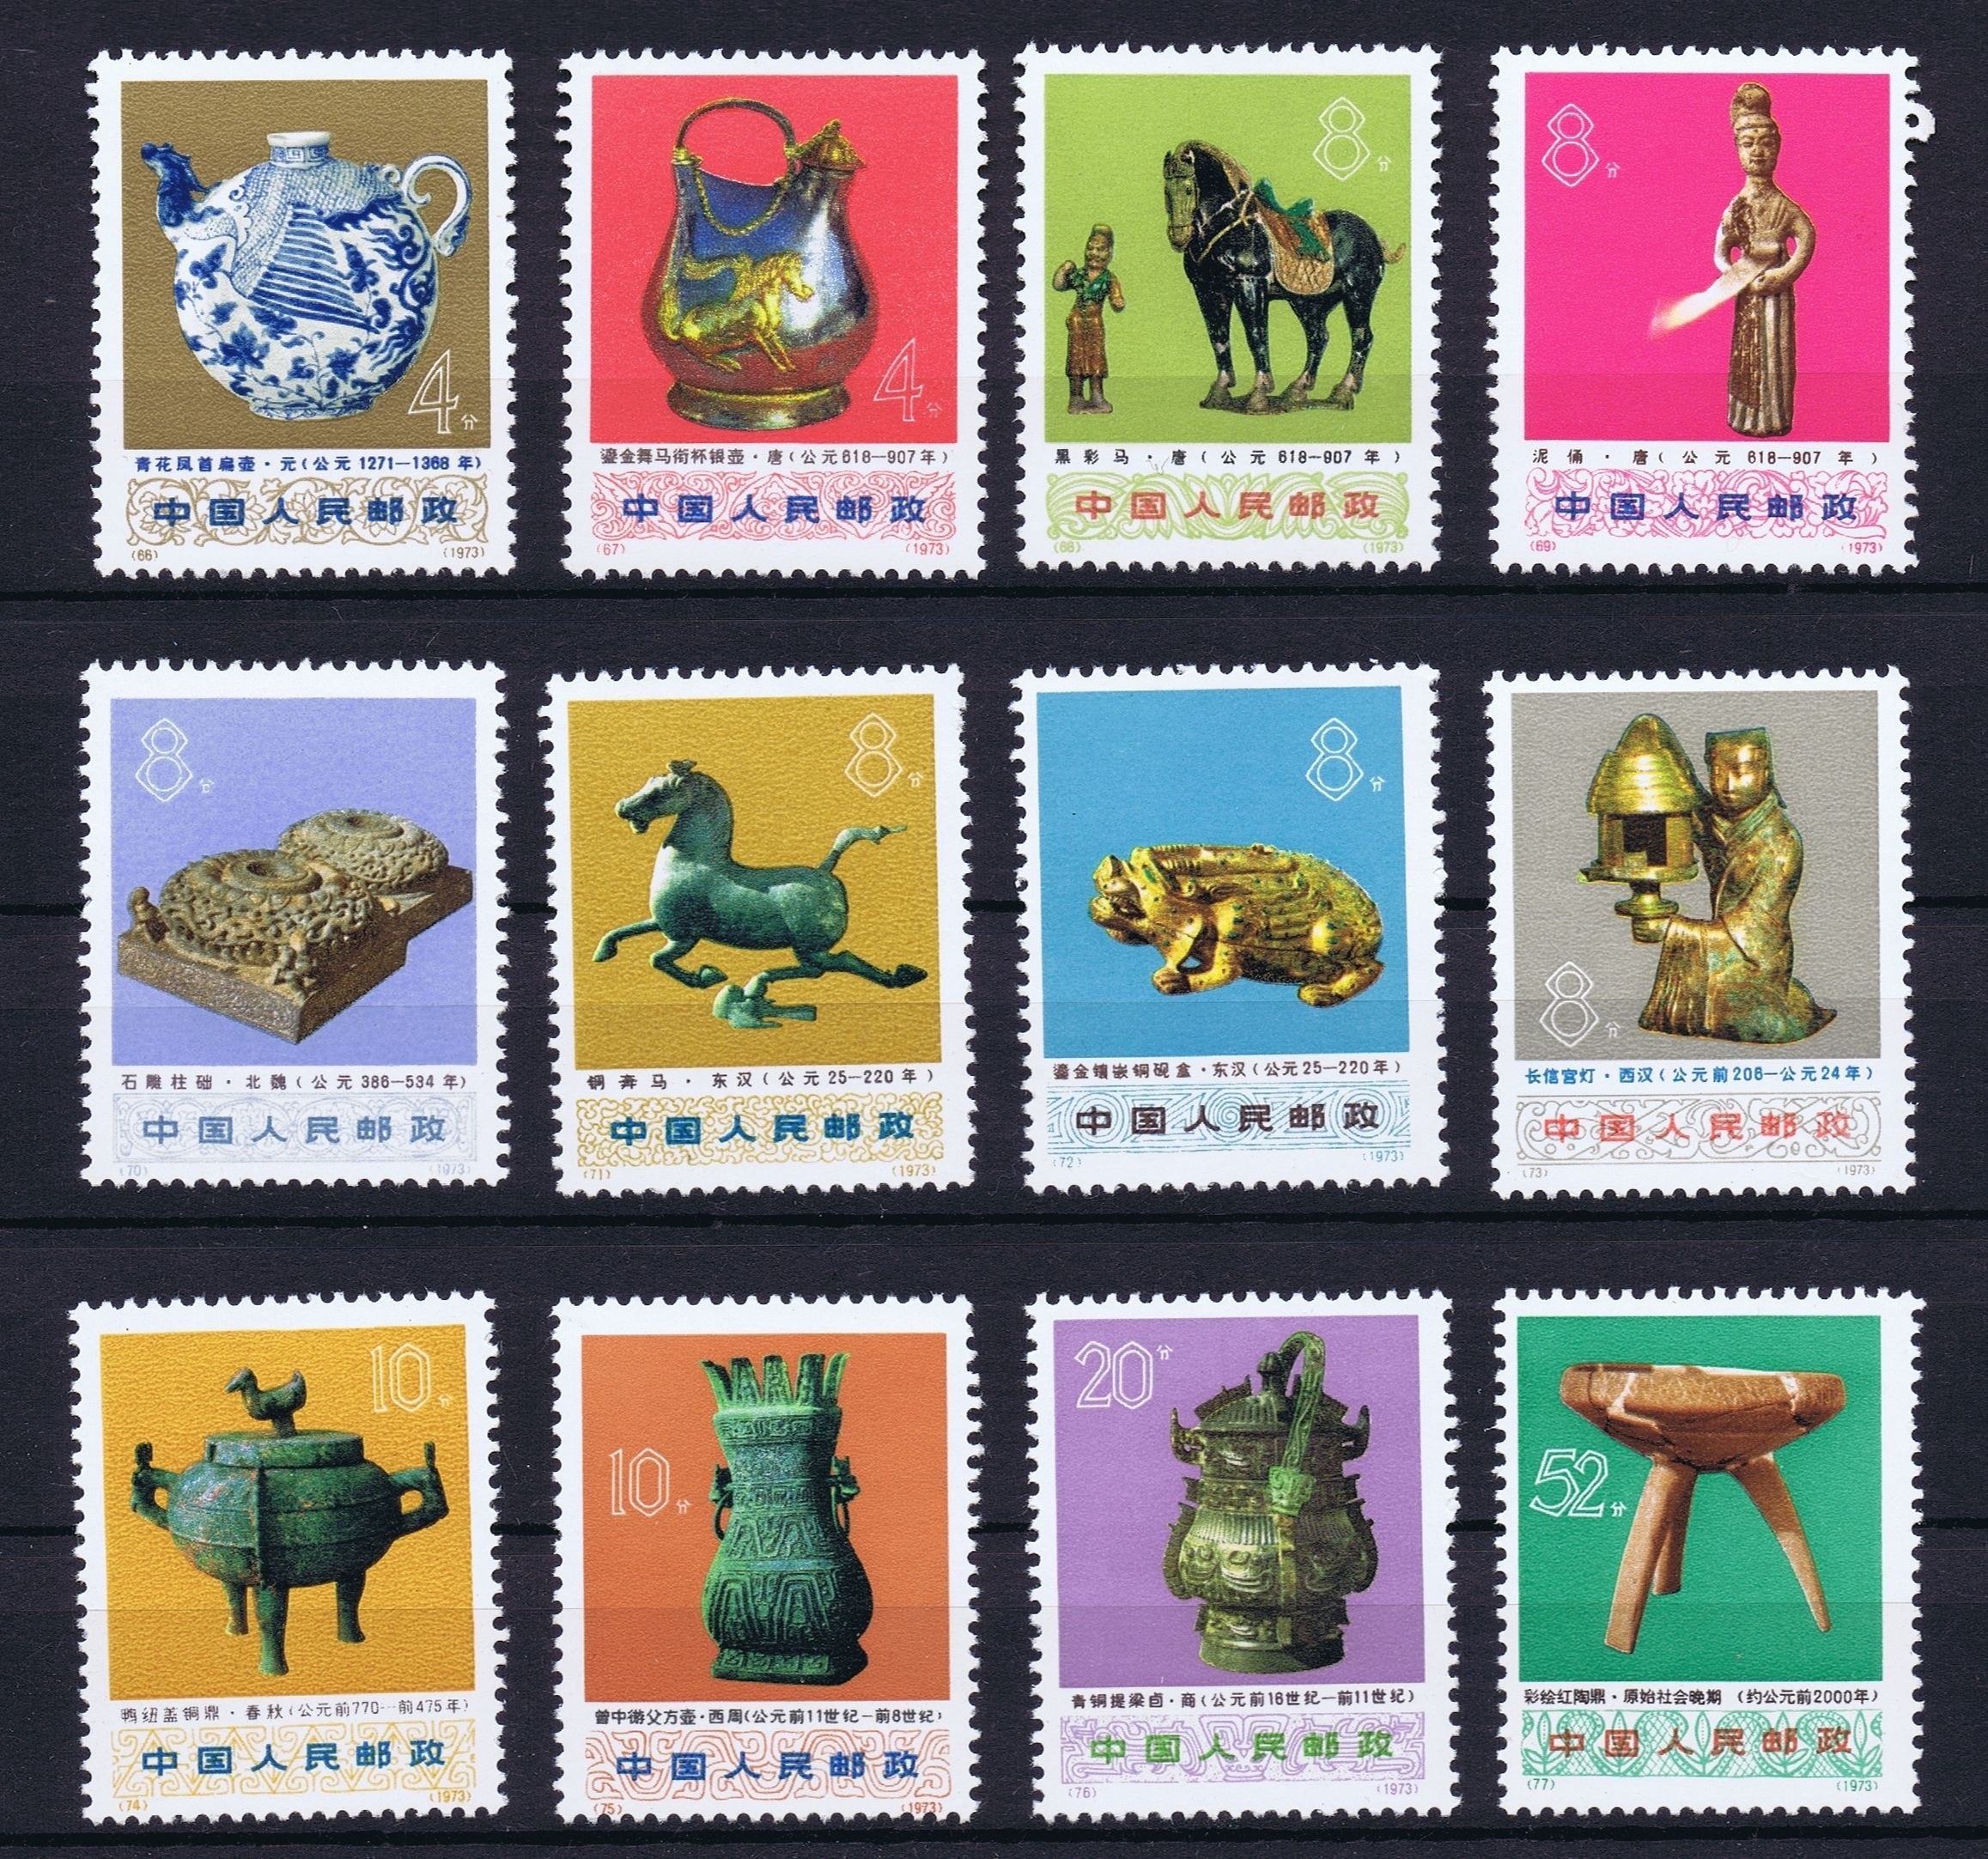 Post, Postage Stamps, China, multi colored, studio shot